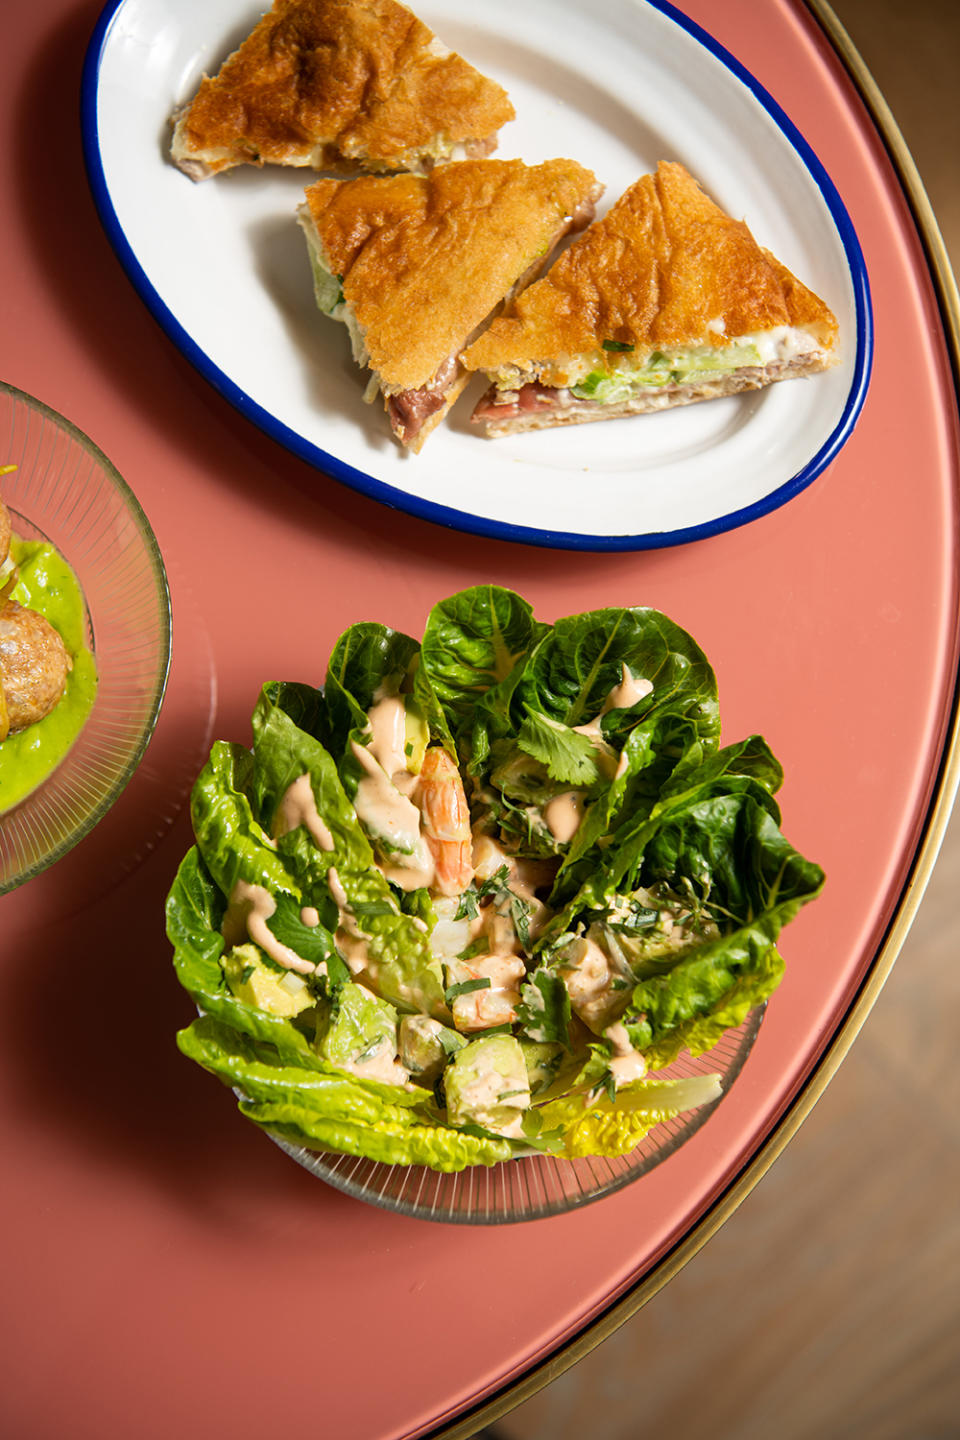 French's shrimp and avocado salad